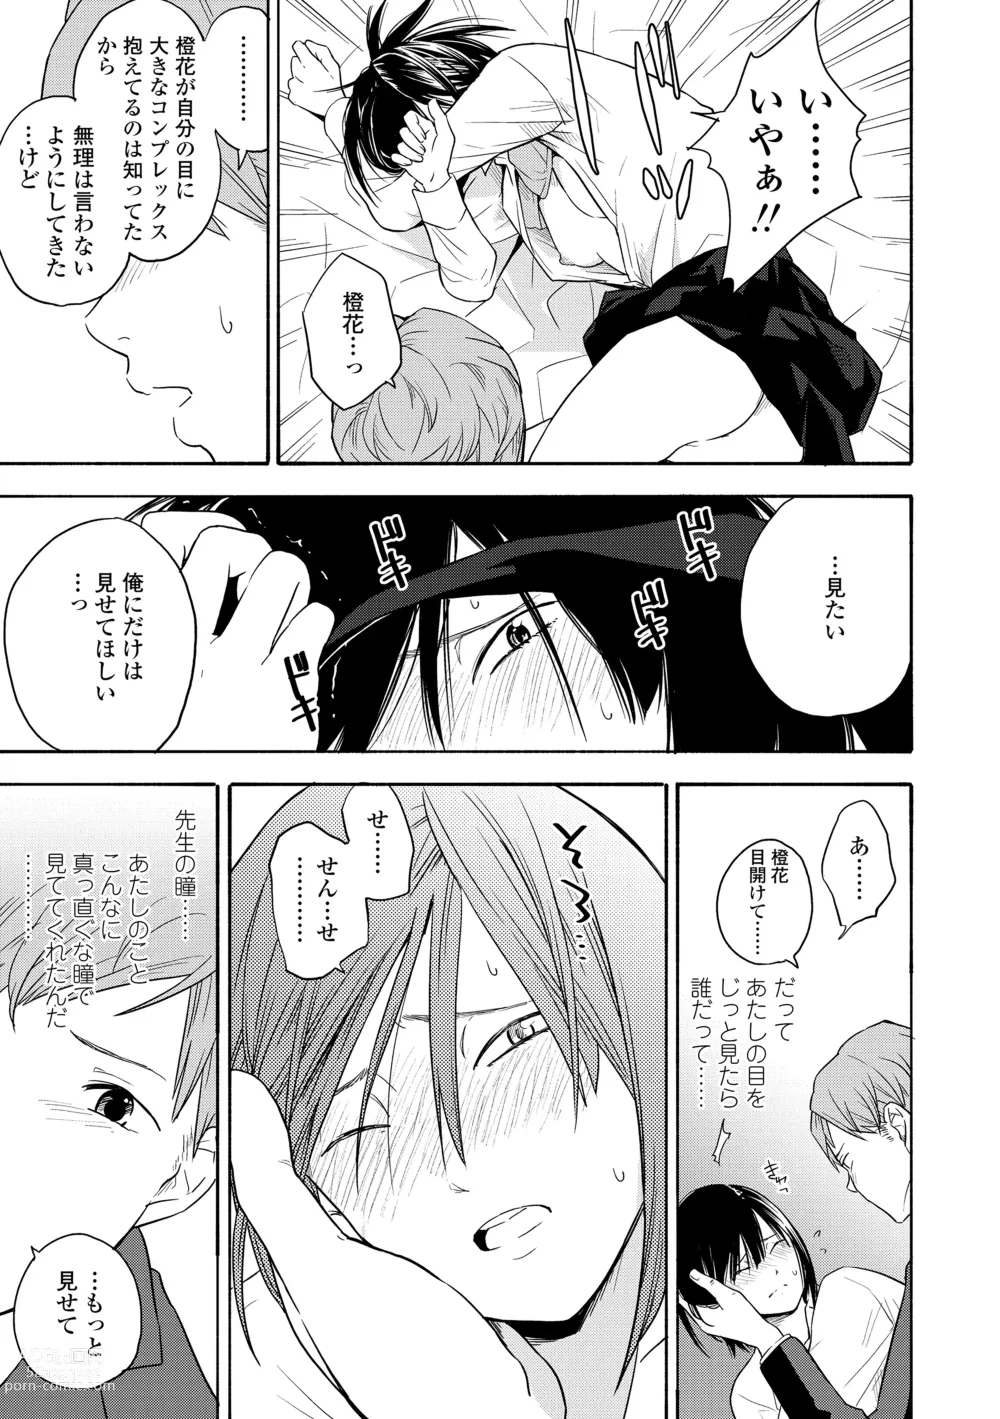 Page 17 of manga Shishunki no Eros - puberty eros + DLsite Kounyu Tokuten